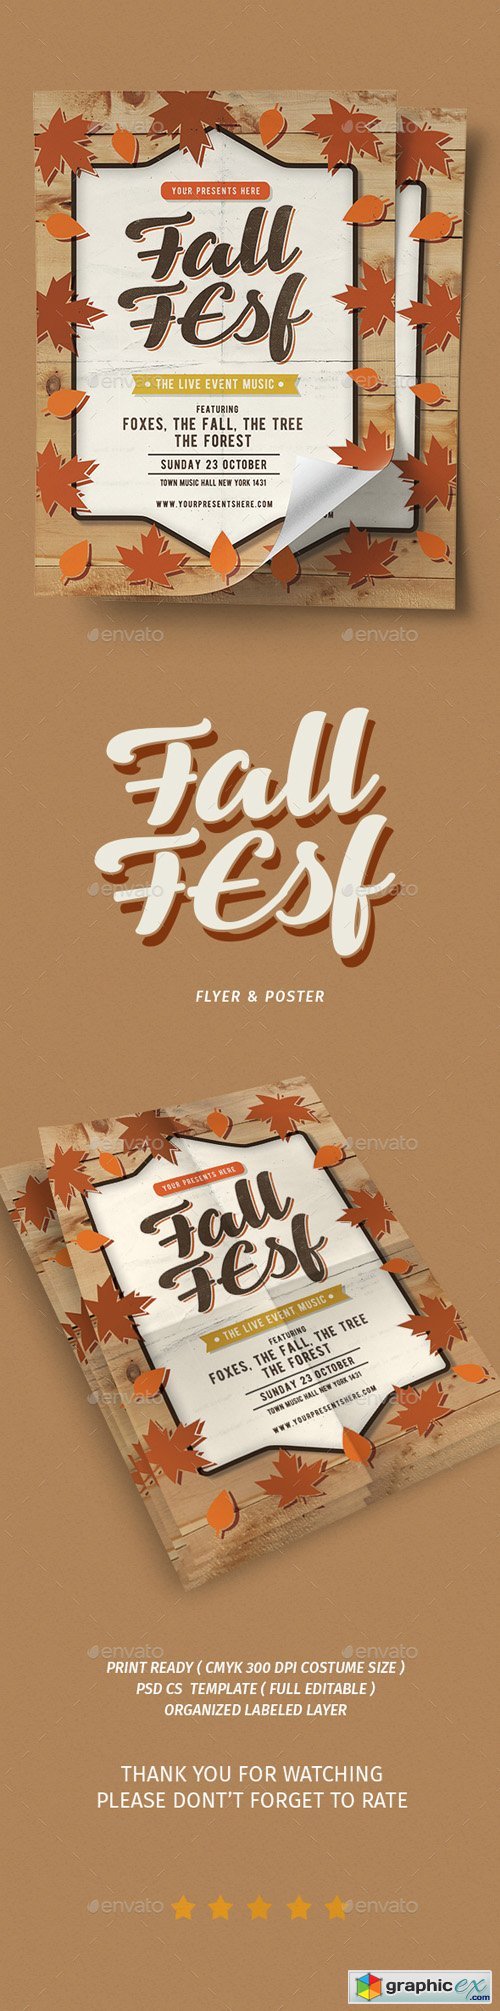 Fall Festival Vol.3